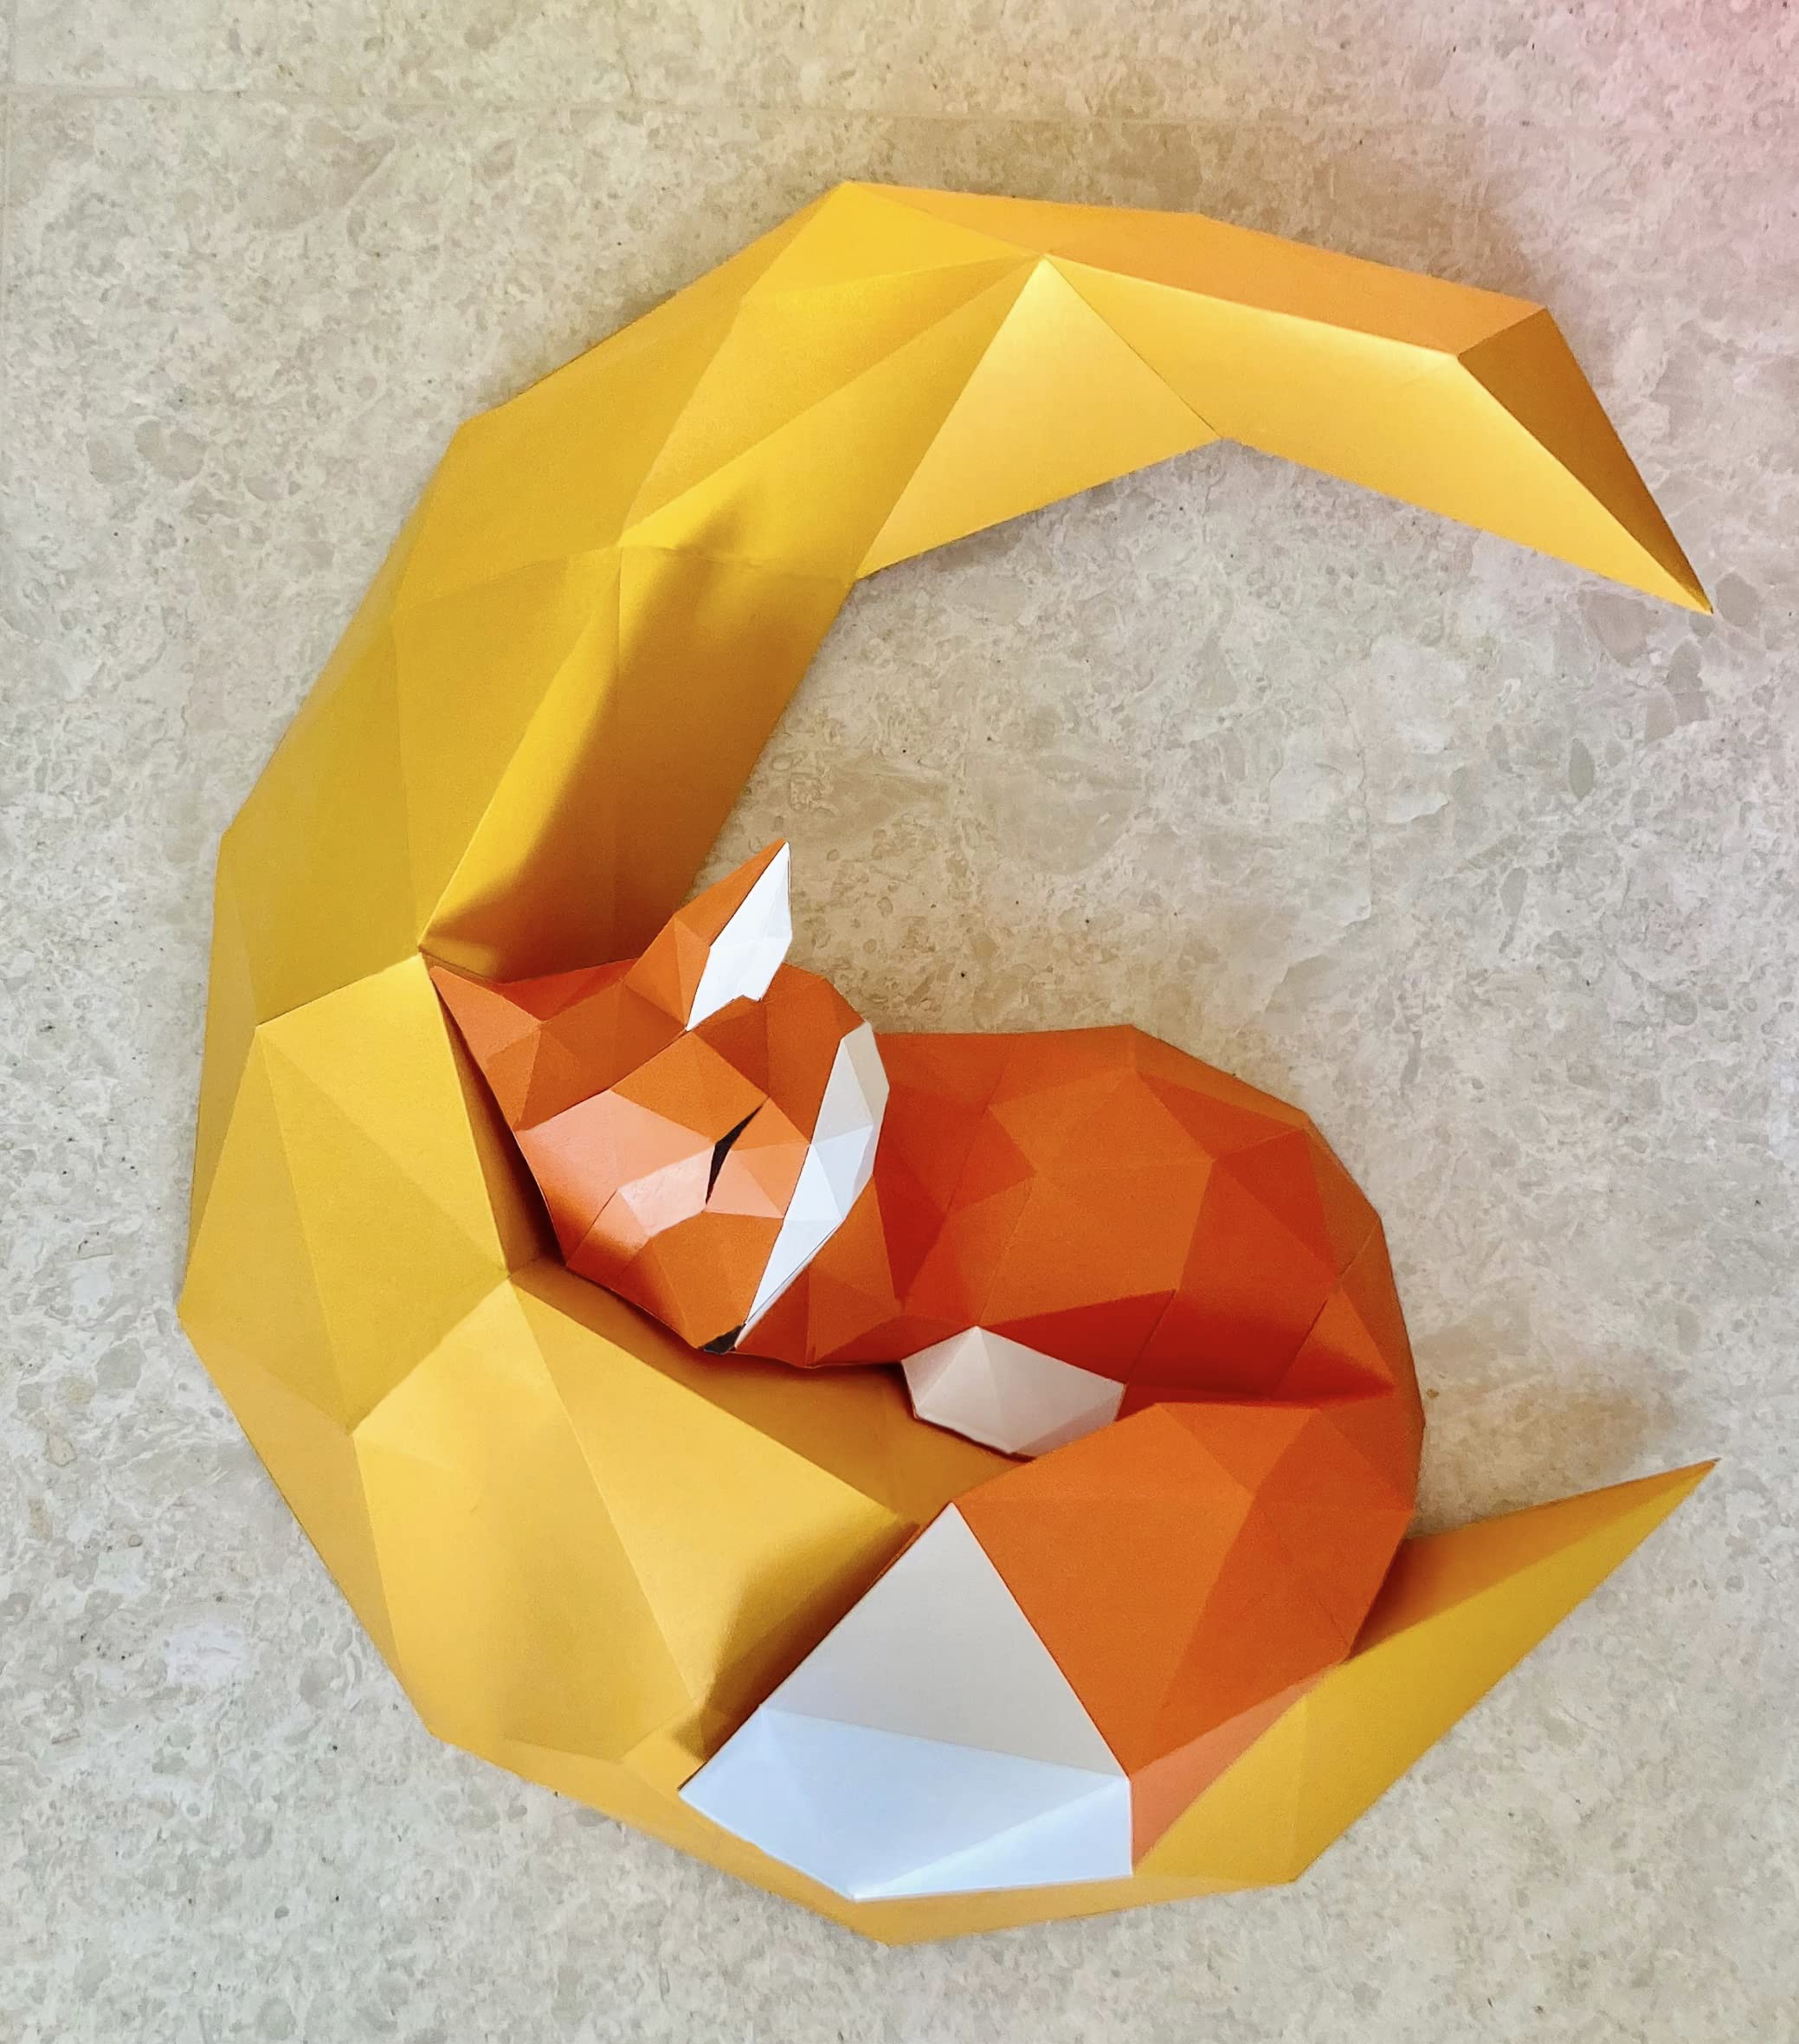 Mua Fox papercraft, fox origami, 3D paper craft, DIY paper craft templates,  wall decor art piece paper ornament, paper sculpture, 3D animal, not a  finished model trên Amazon Đức chính hãng 2023 |